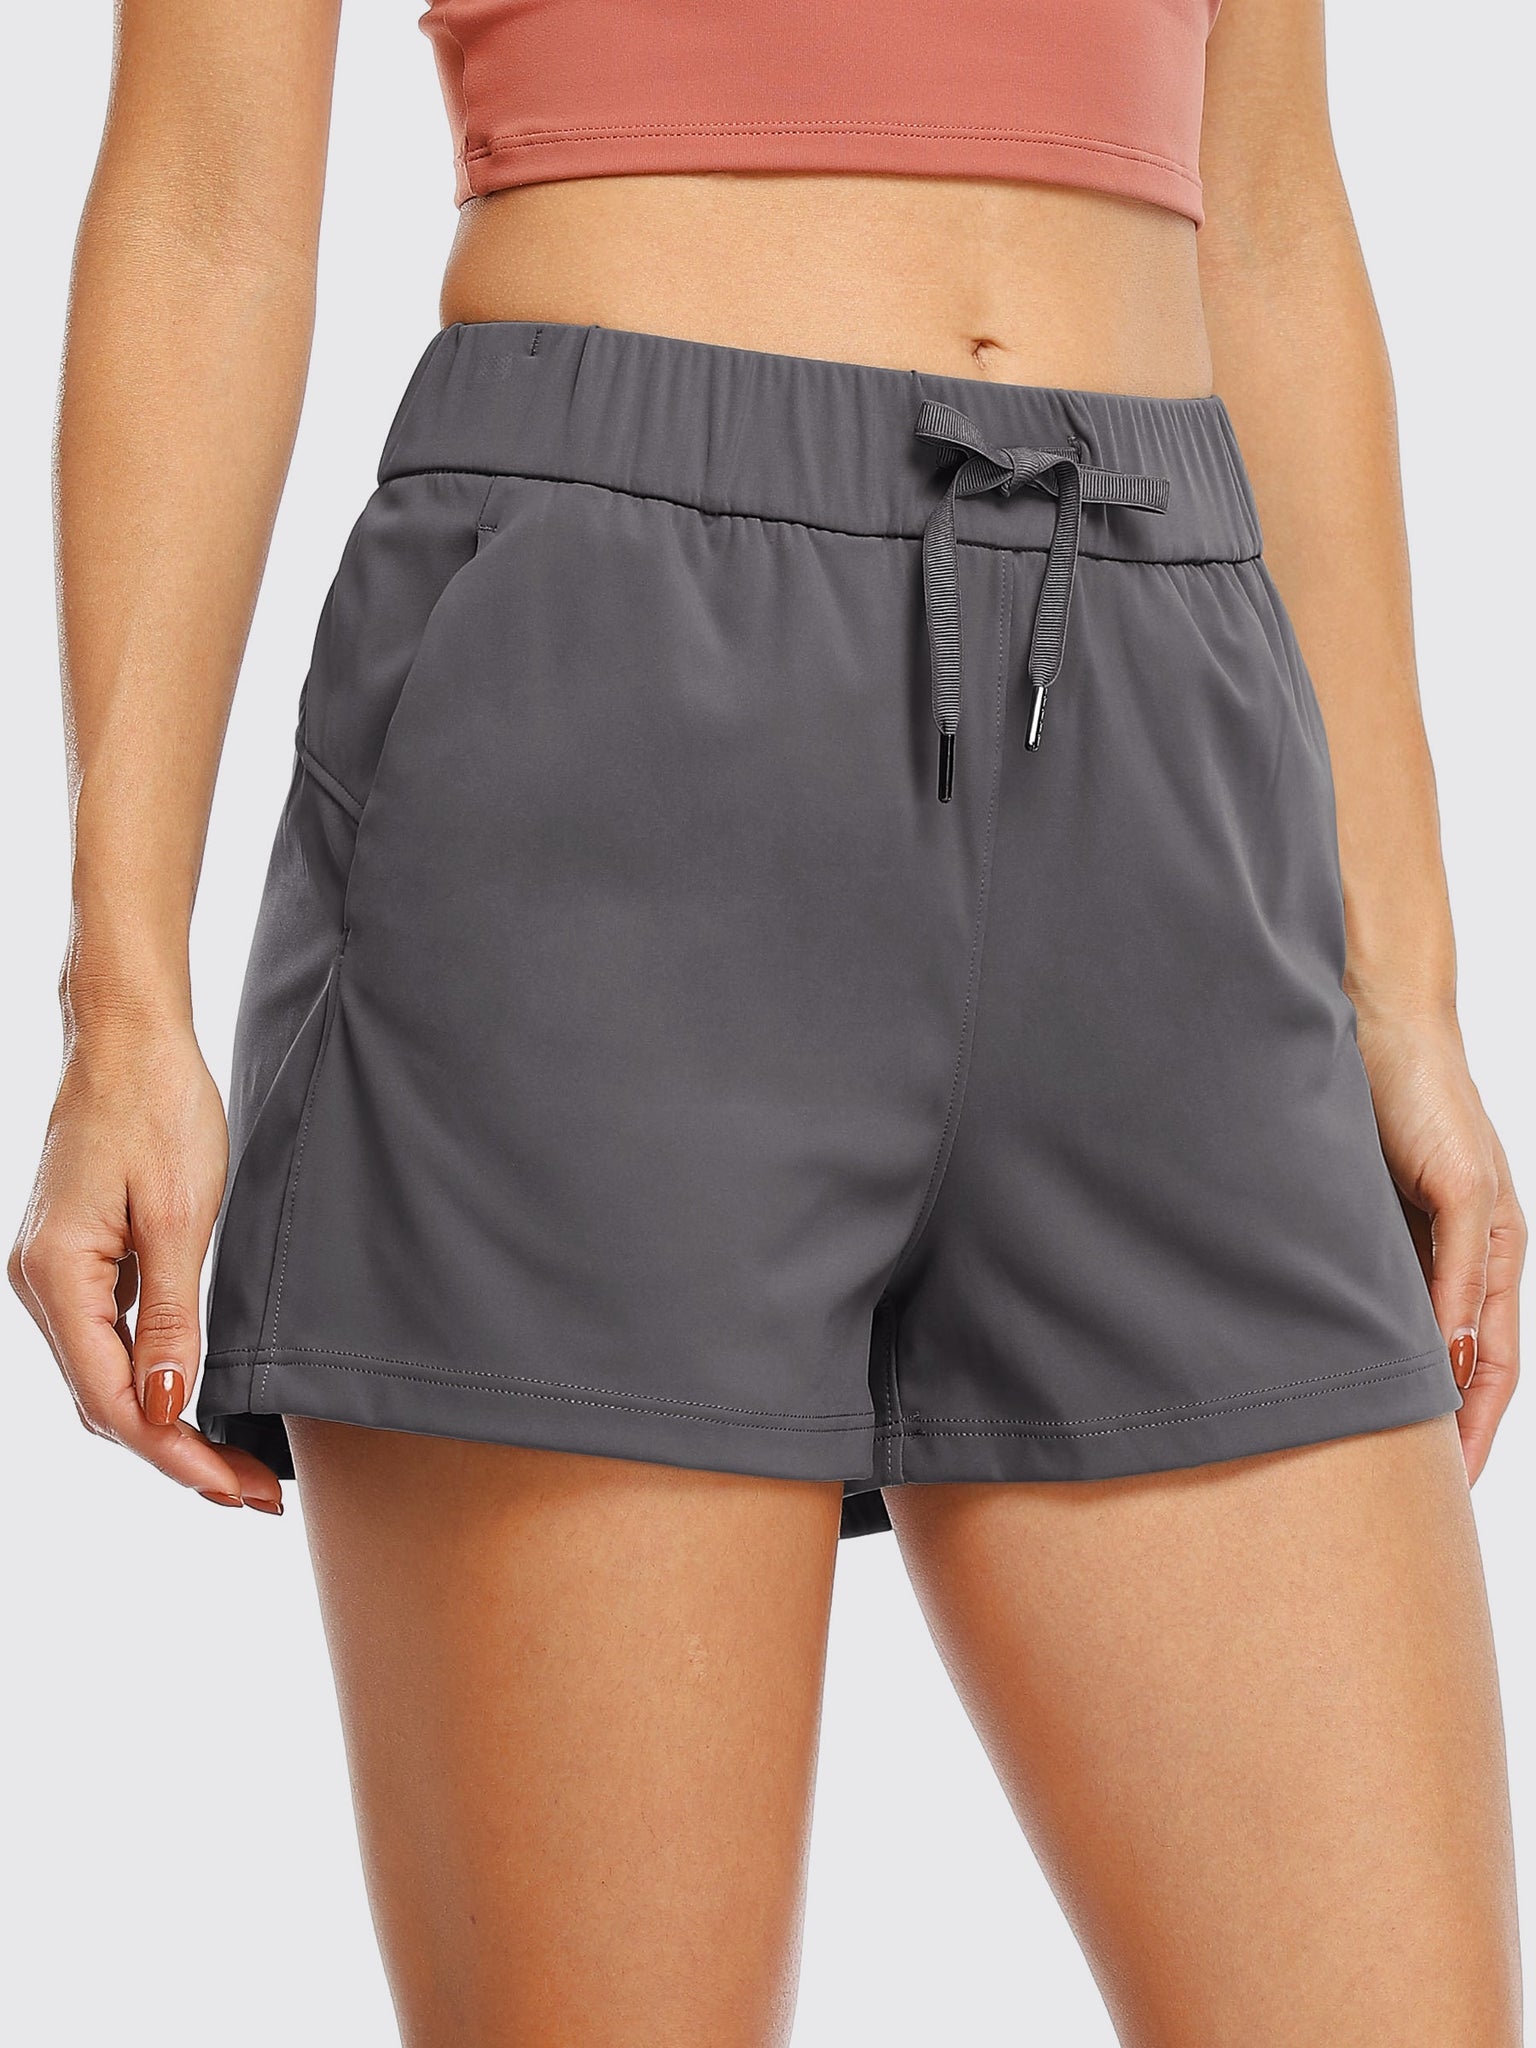 Willit Women's Summer 2.5 Inch Shorts_Deep Gray3